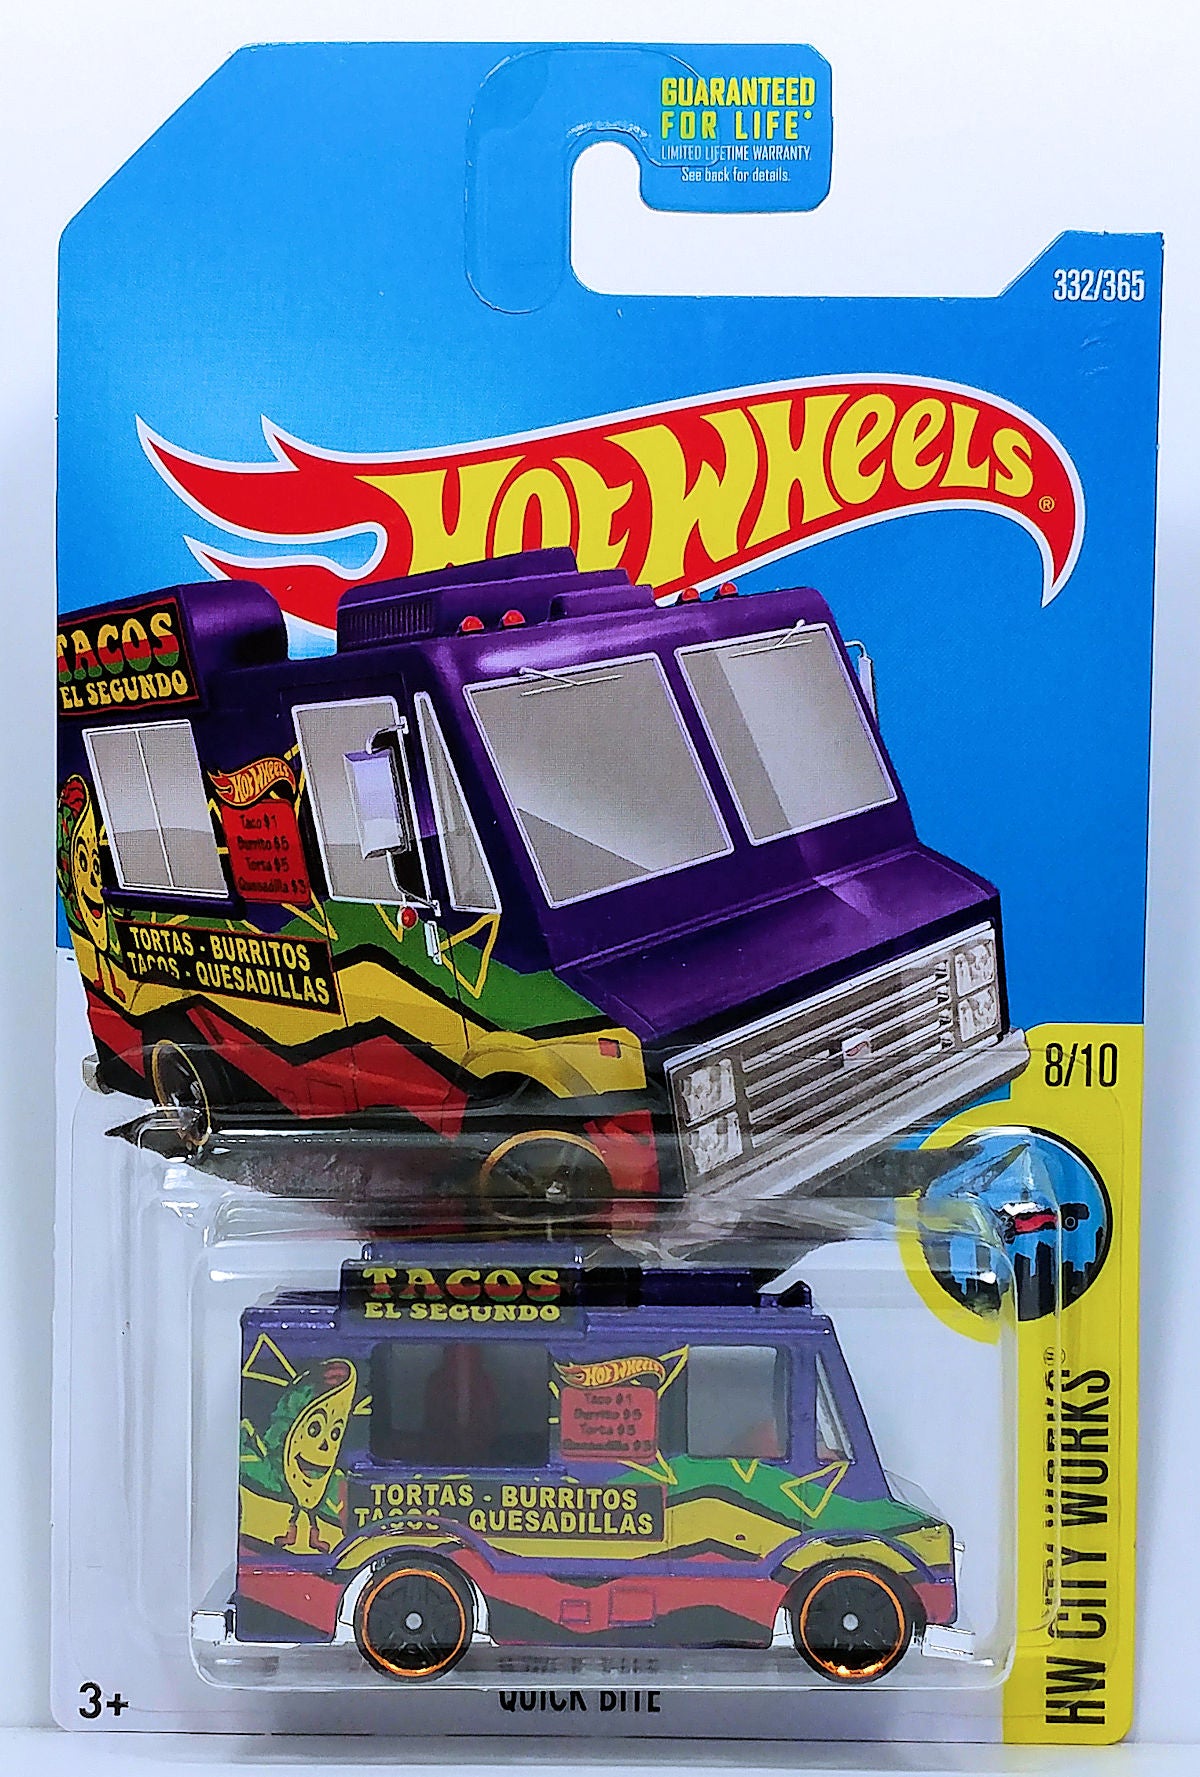 Hot Wheels 2017 - Collector # 332/365 - HW City Works 8/10 - Quick Bite (Ice Cream Truck) - Purple / Tacos